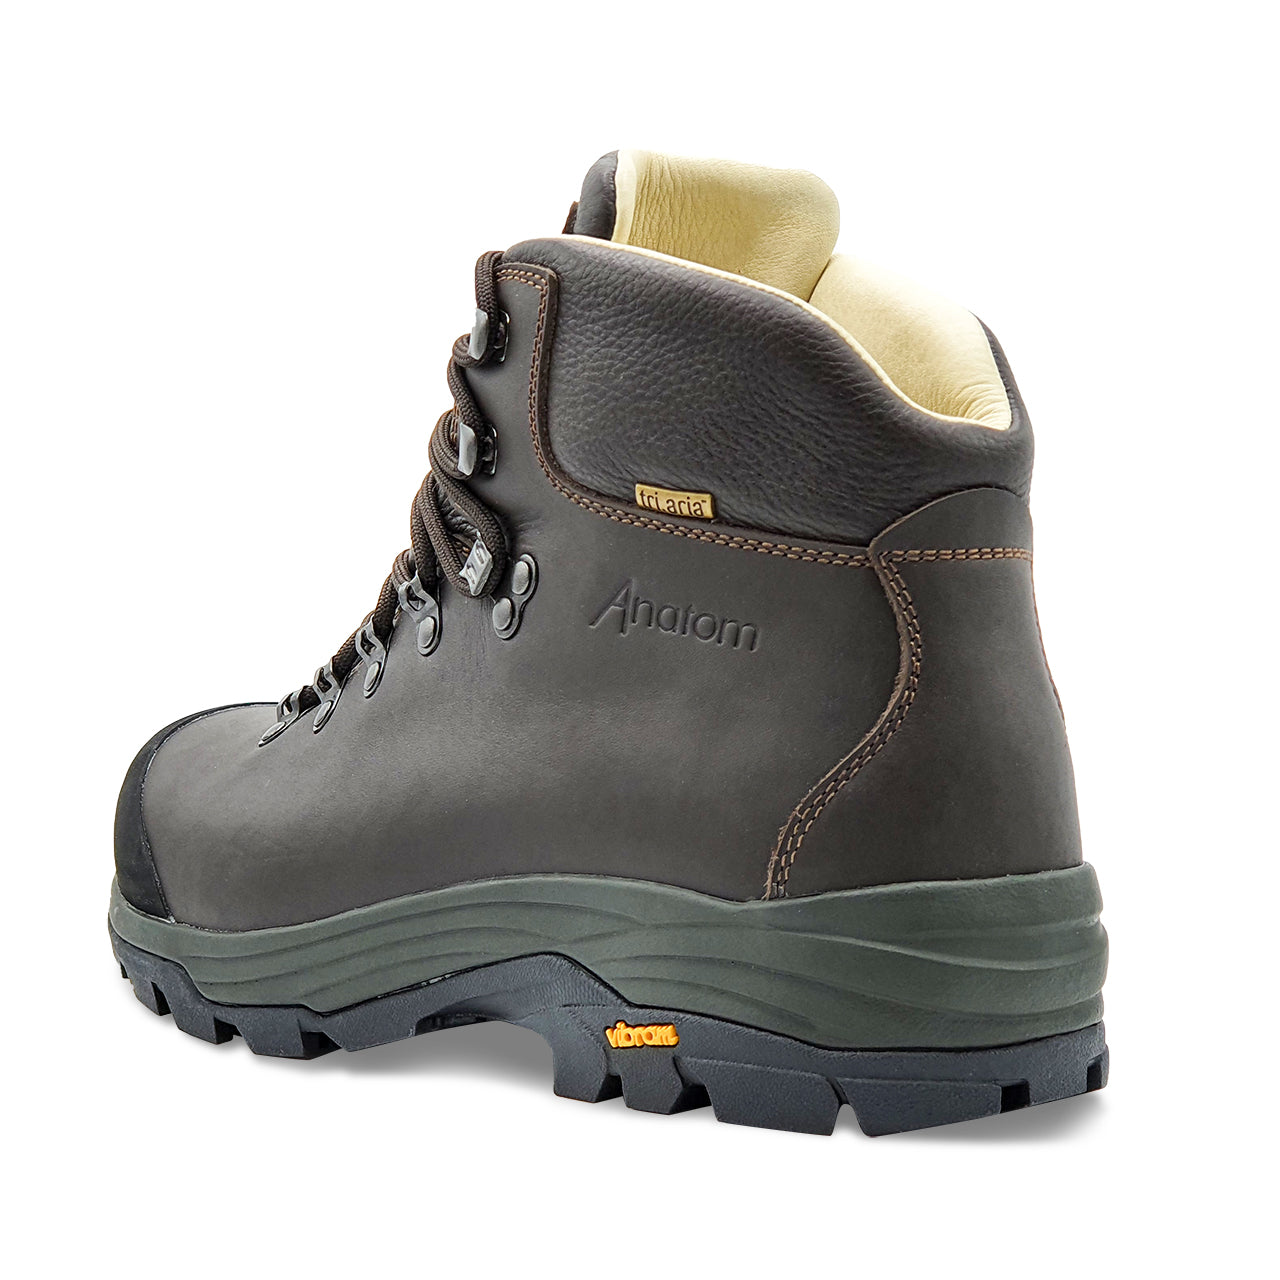 ANATOM Q3 Braeriach Comfort Trekking Boots with Vibram outsole.